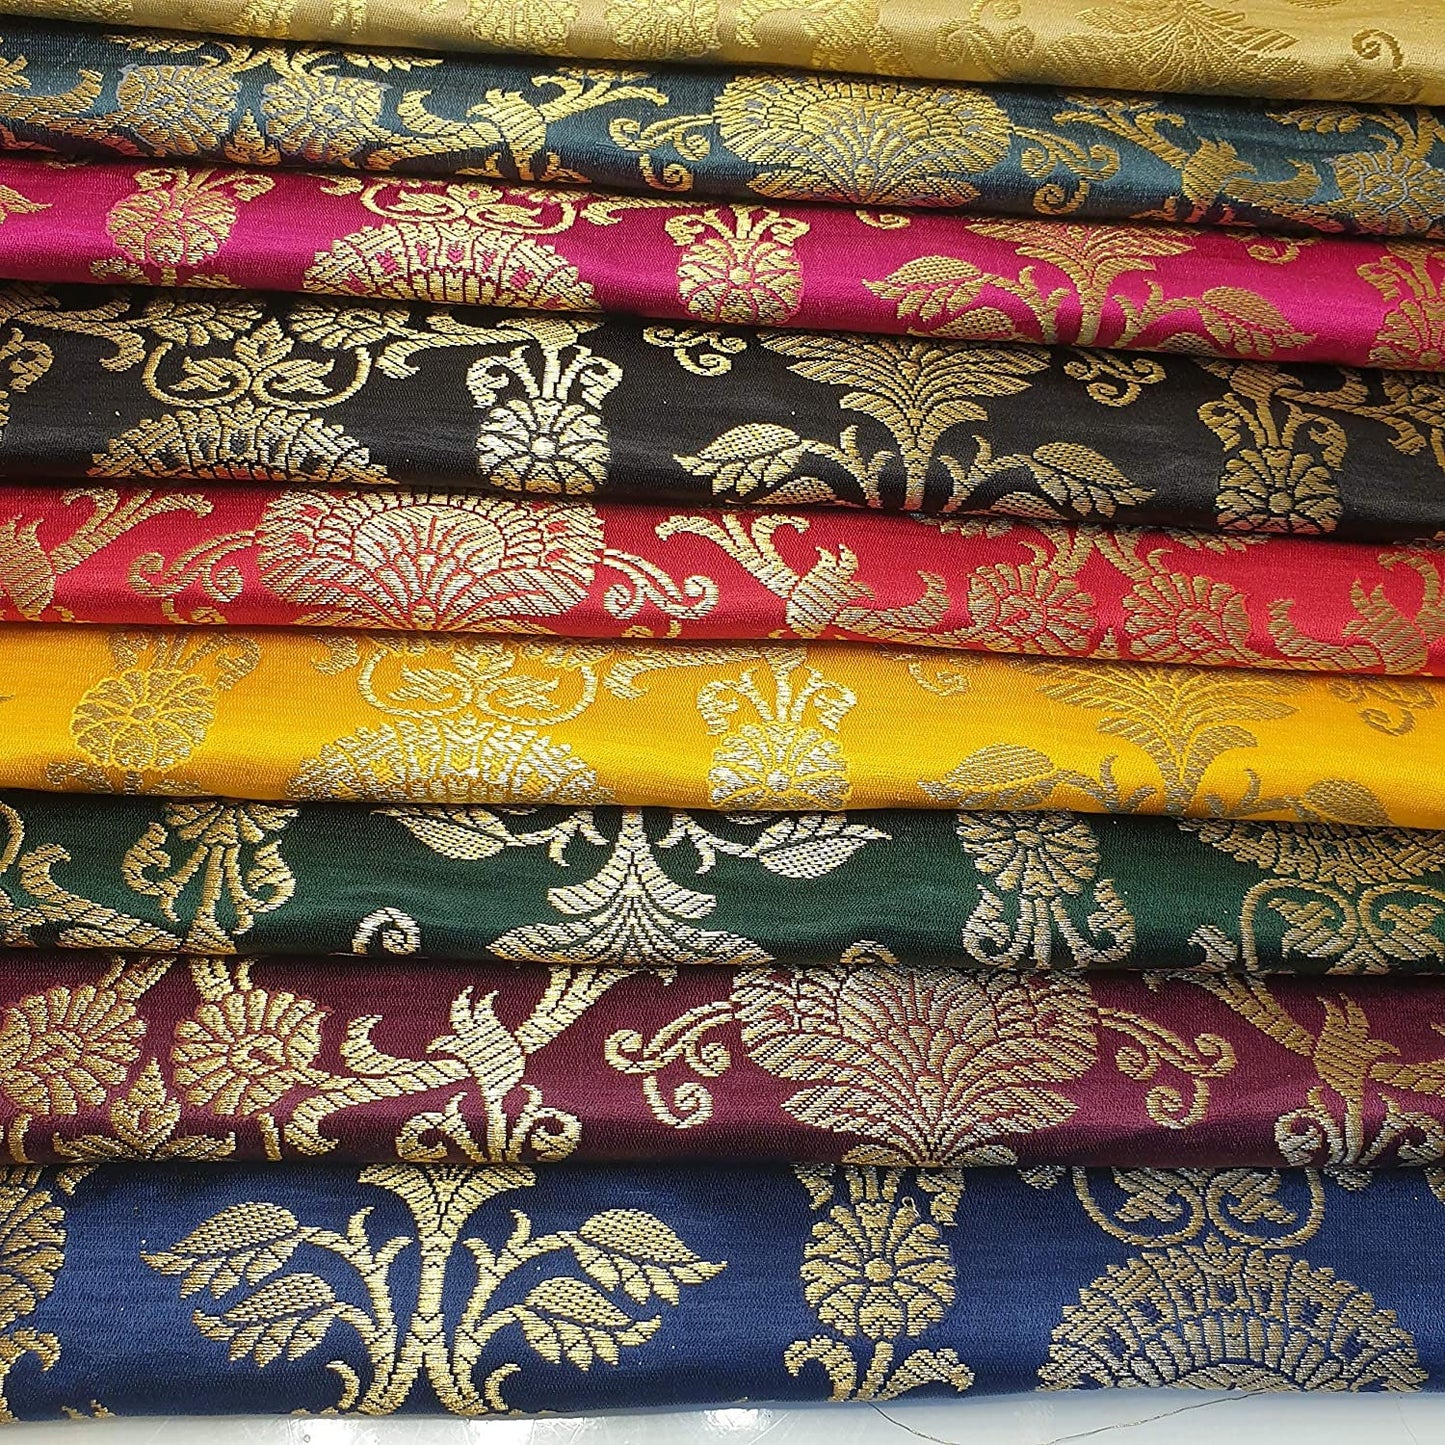 Ornamental Black Floral Gold Metallic Indian Banarasi Brocade Fabric Handloom Premium Fabric By The Meter AM-01